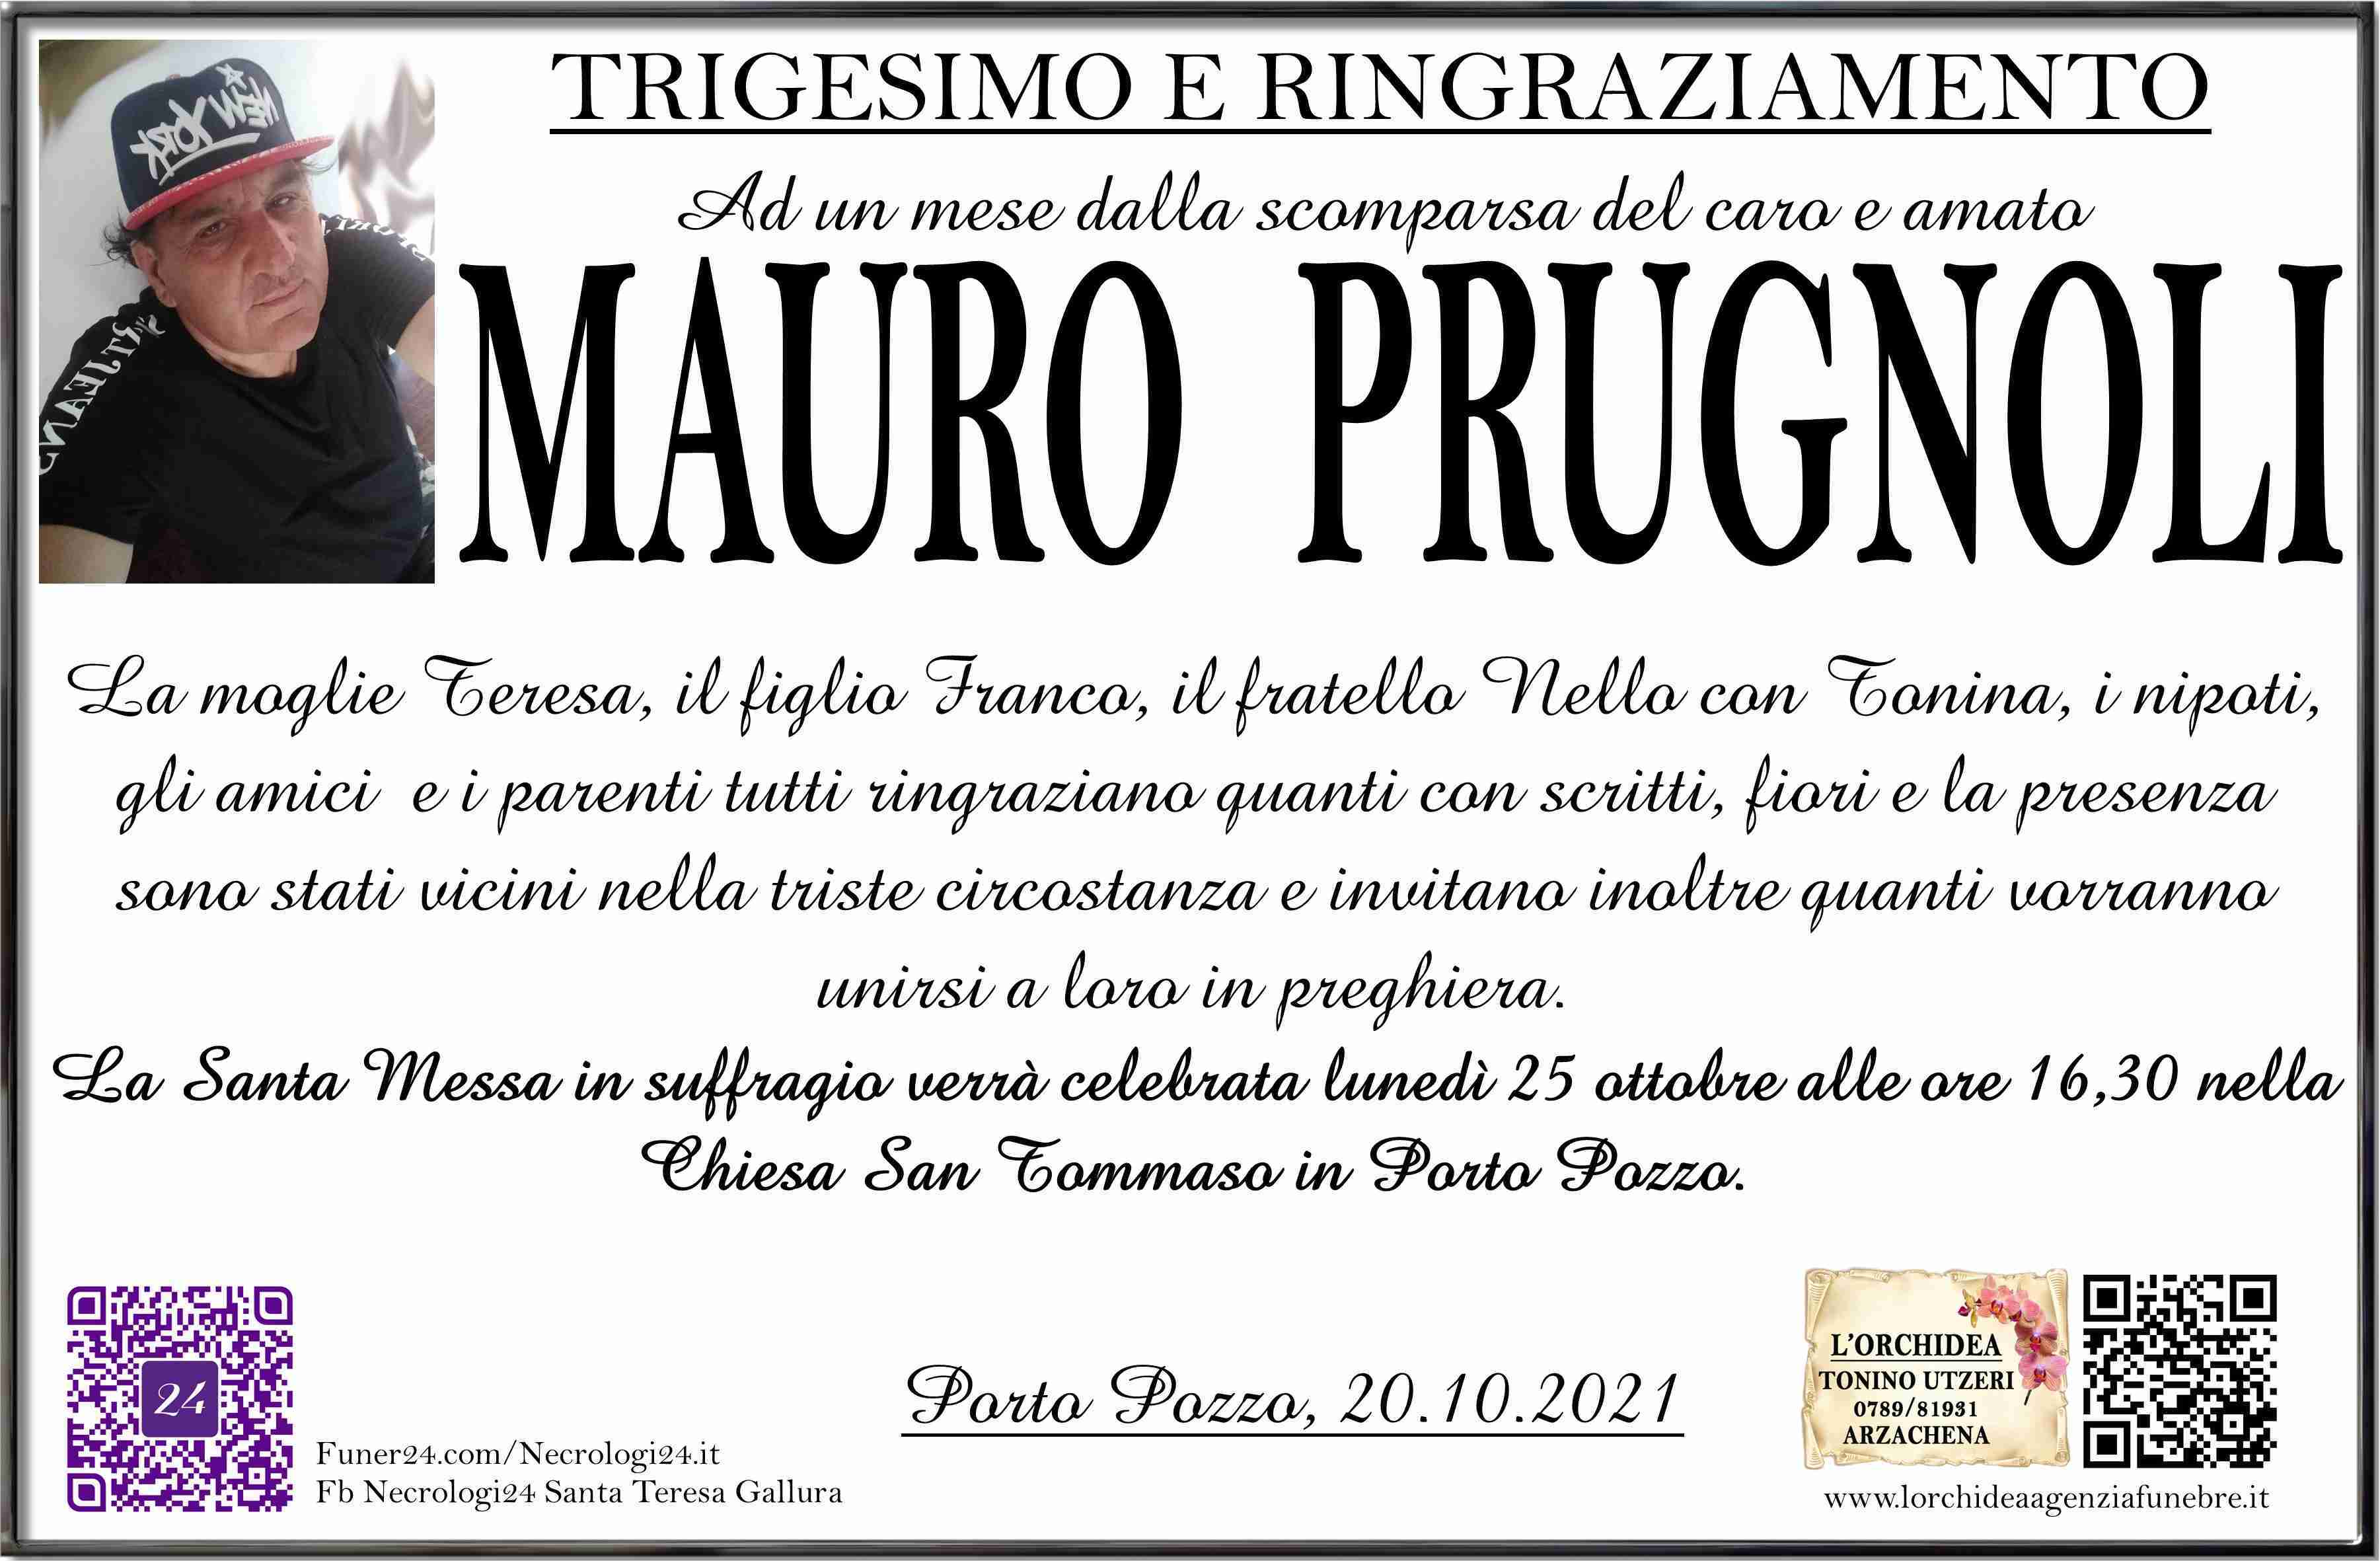 Mauro Prugnoli